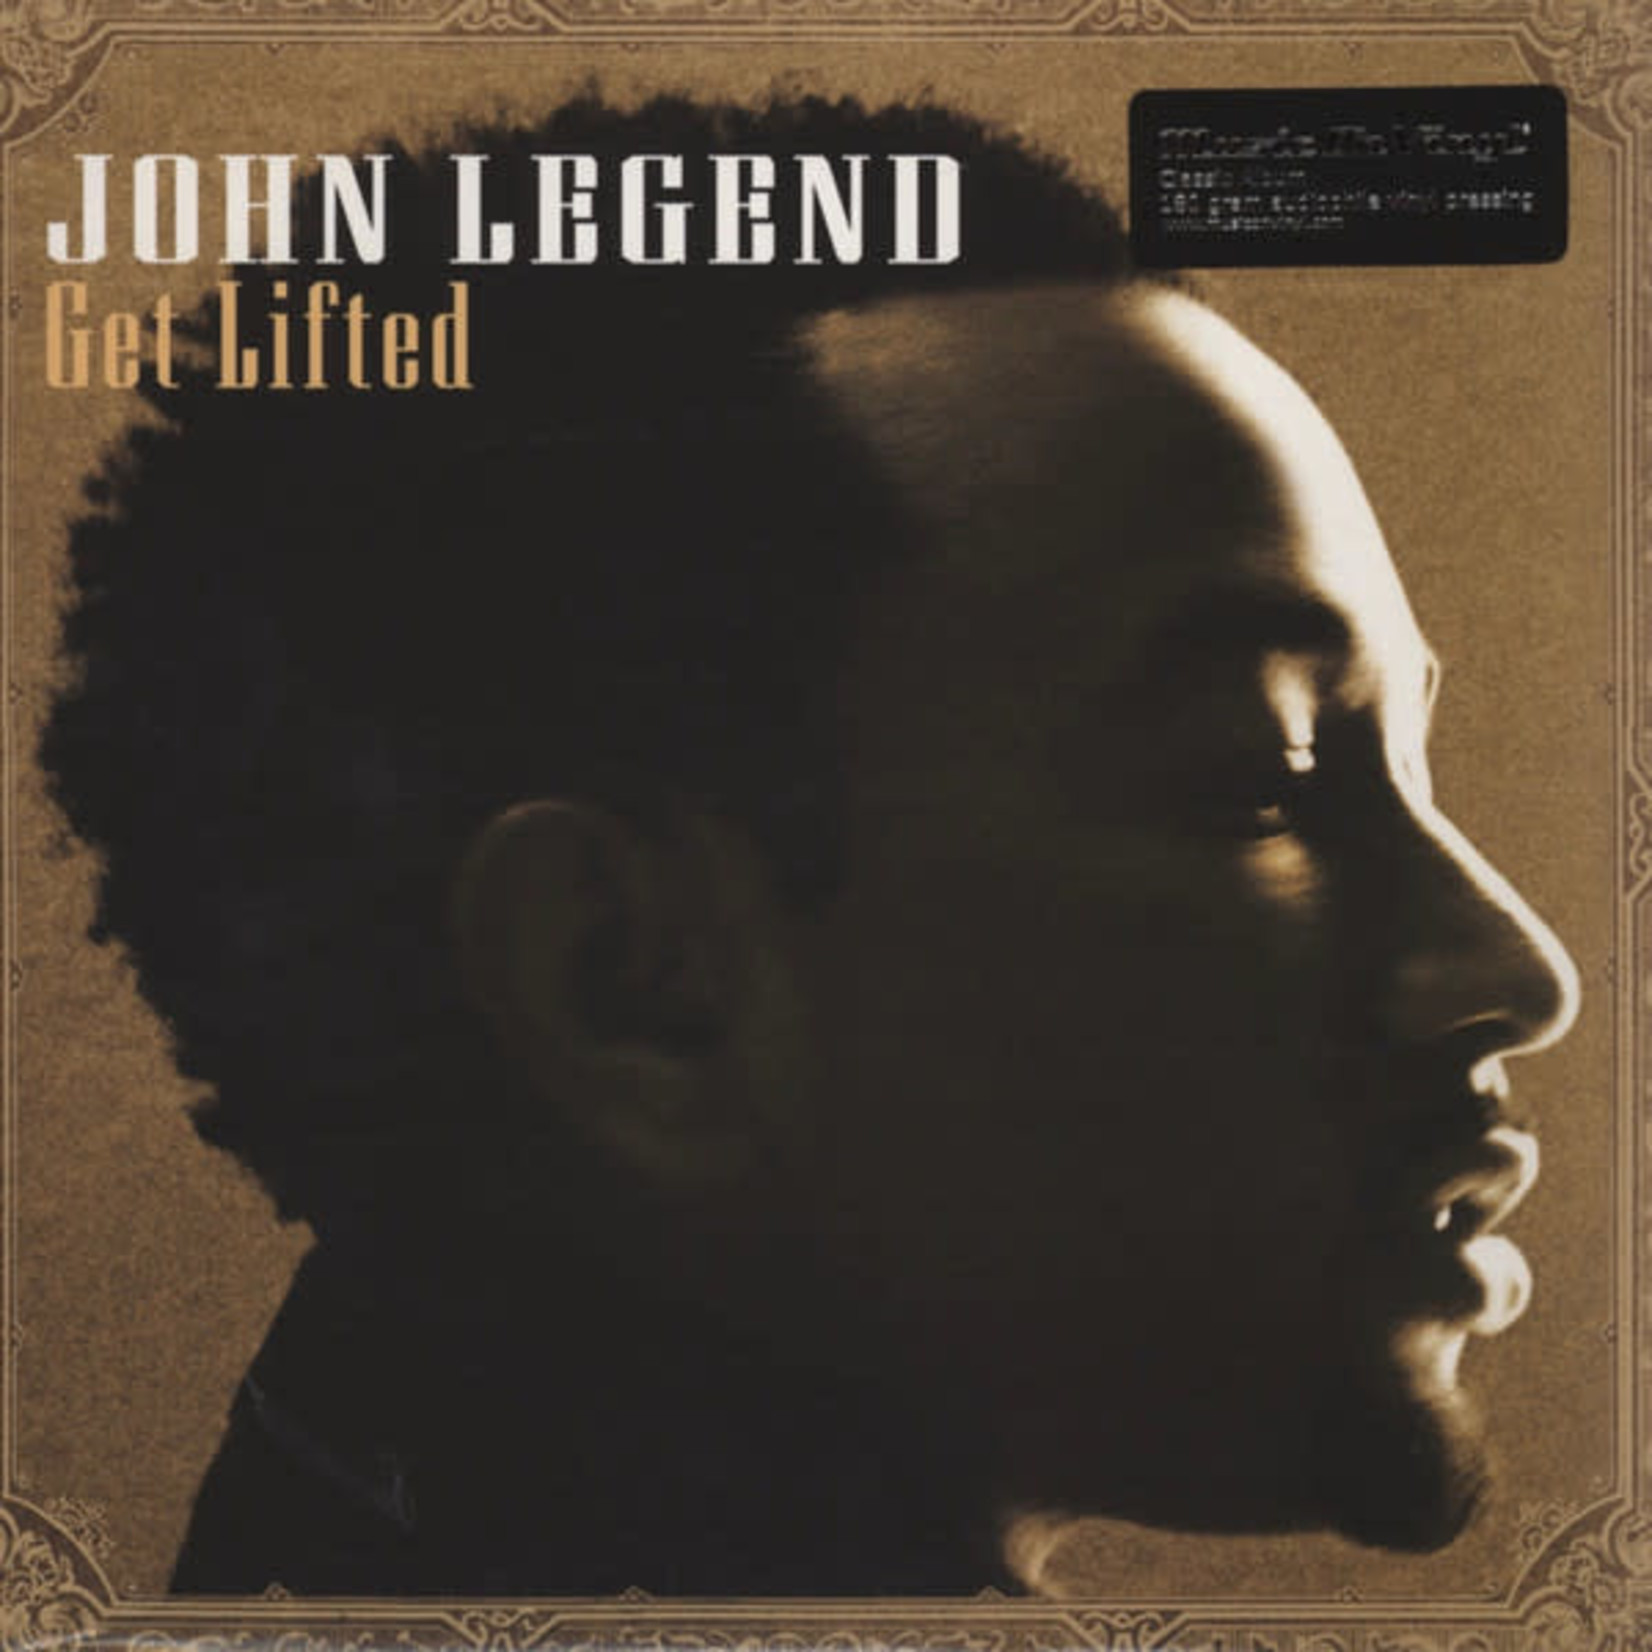 Music on Vinyl John Legend - Get Lifted (2LP)